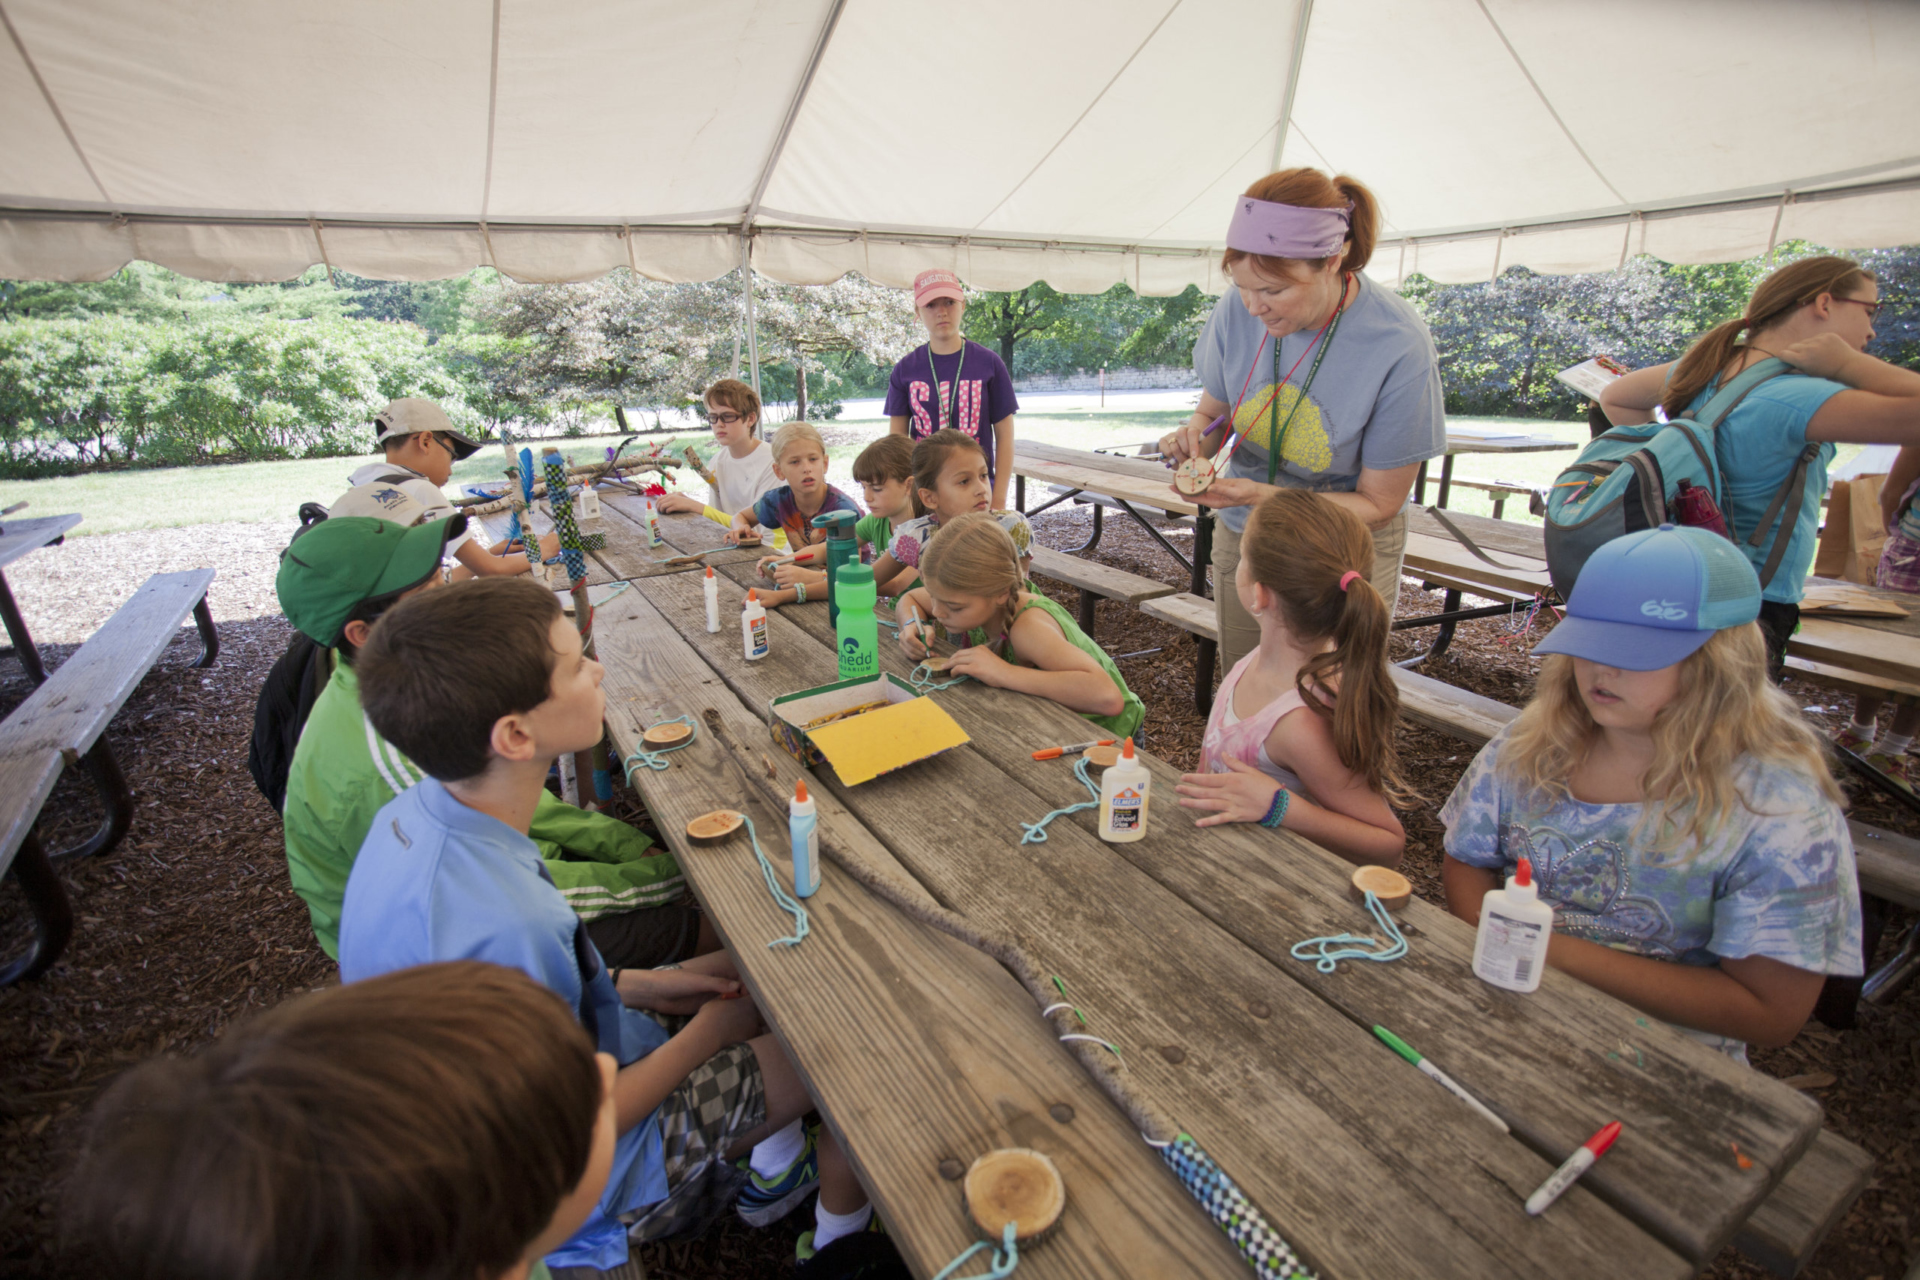 Summer science camp group make crafts